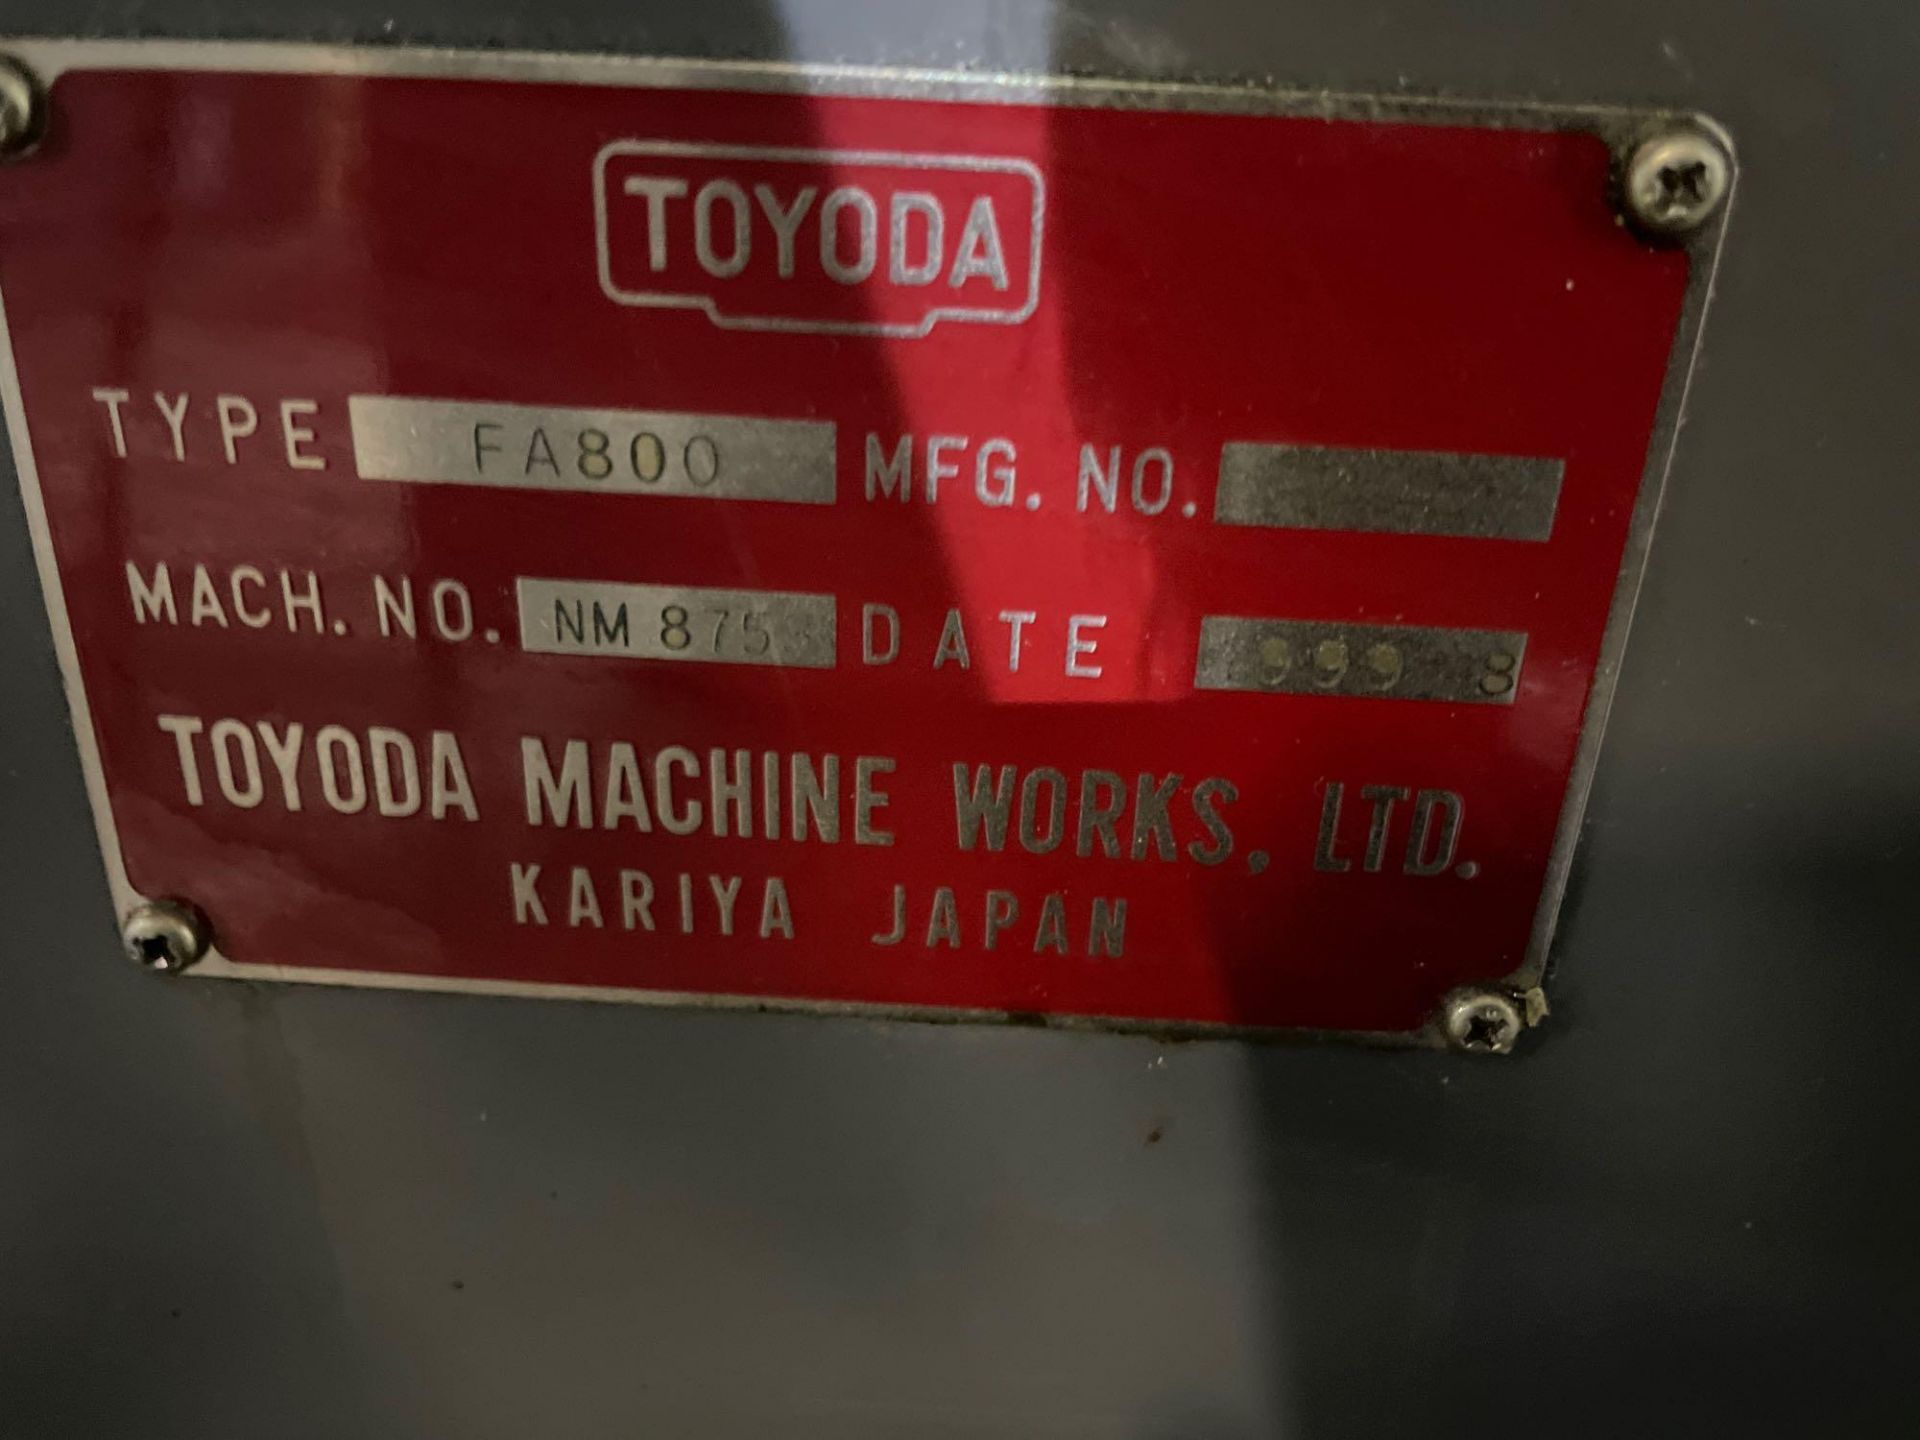 Toyoda FA-1050 4-axis, Fanuc 16i , 41" pllts, 10K RPM, CT50, 120 ATC, CTS, probe, New 1999 - Image 9 of 14